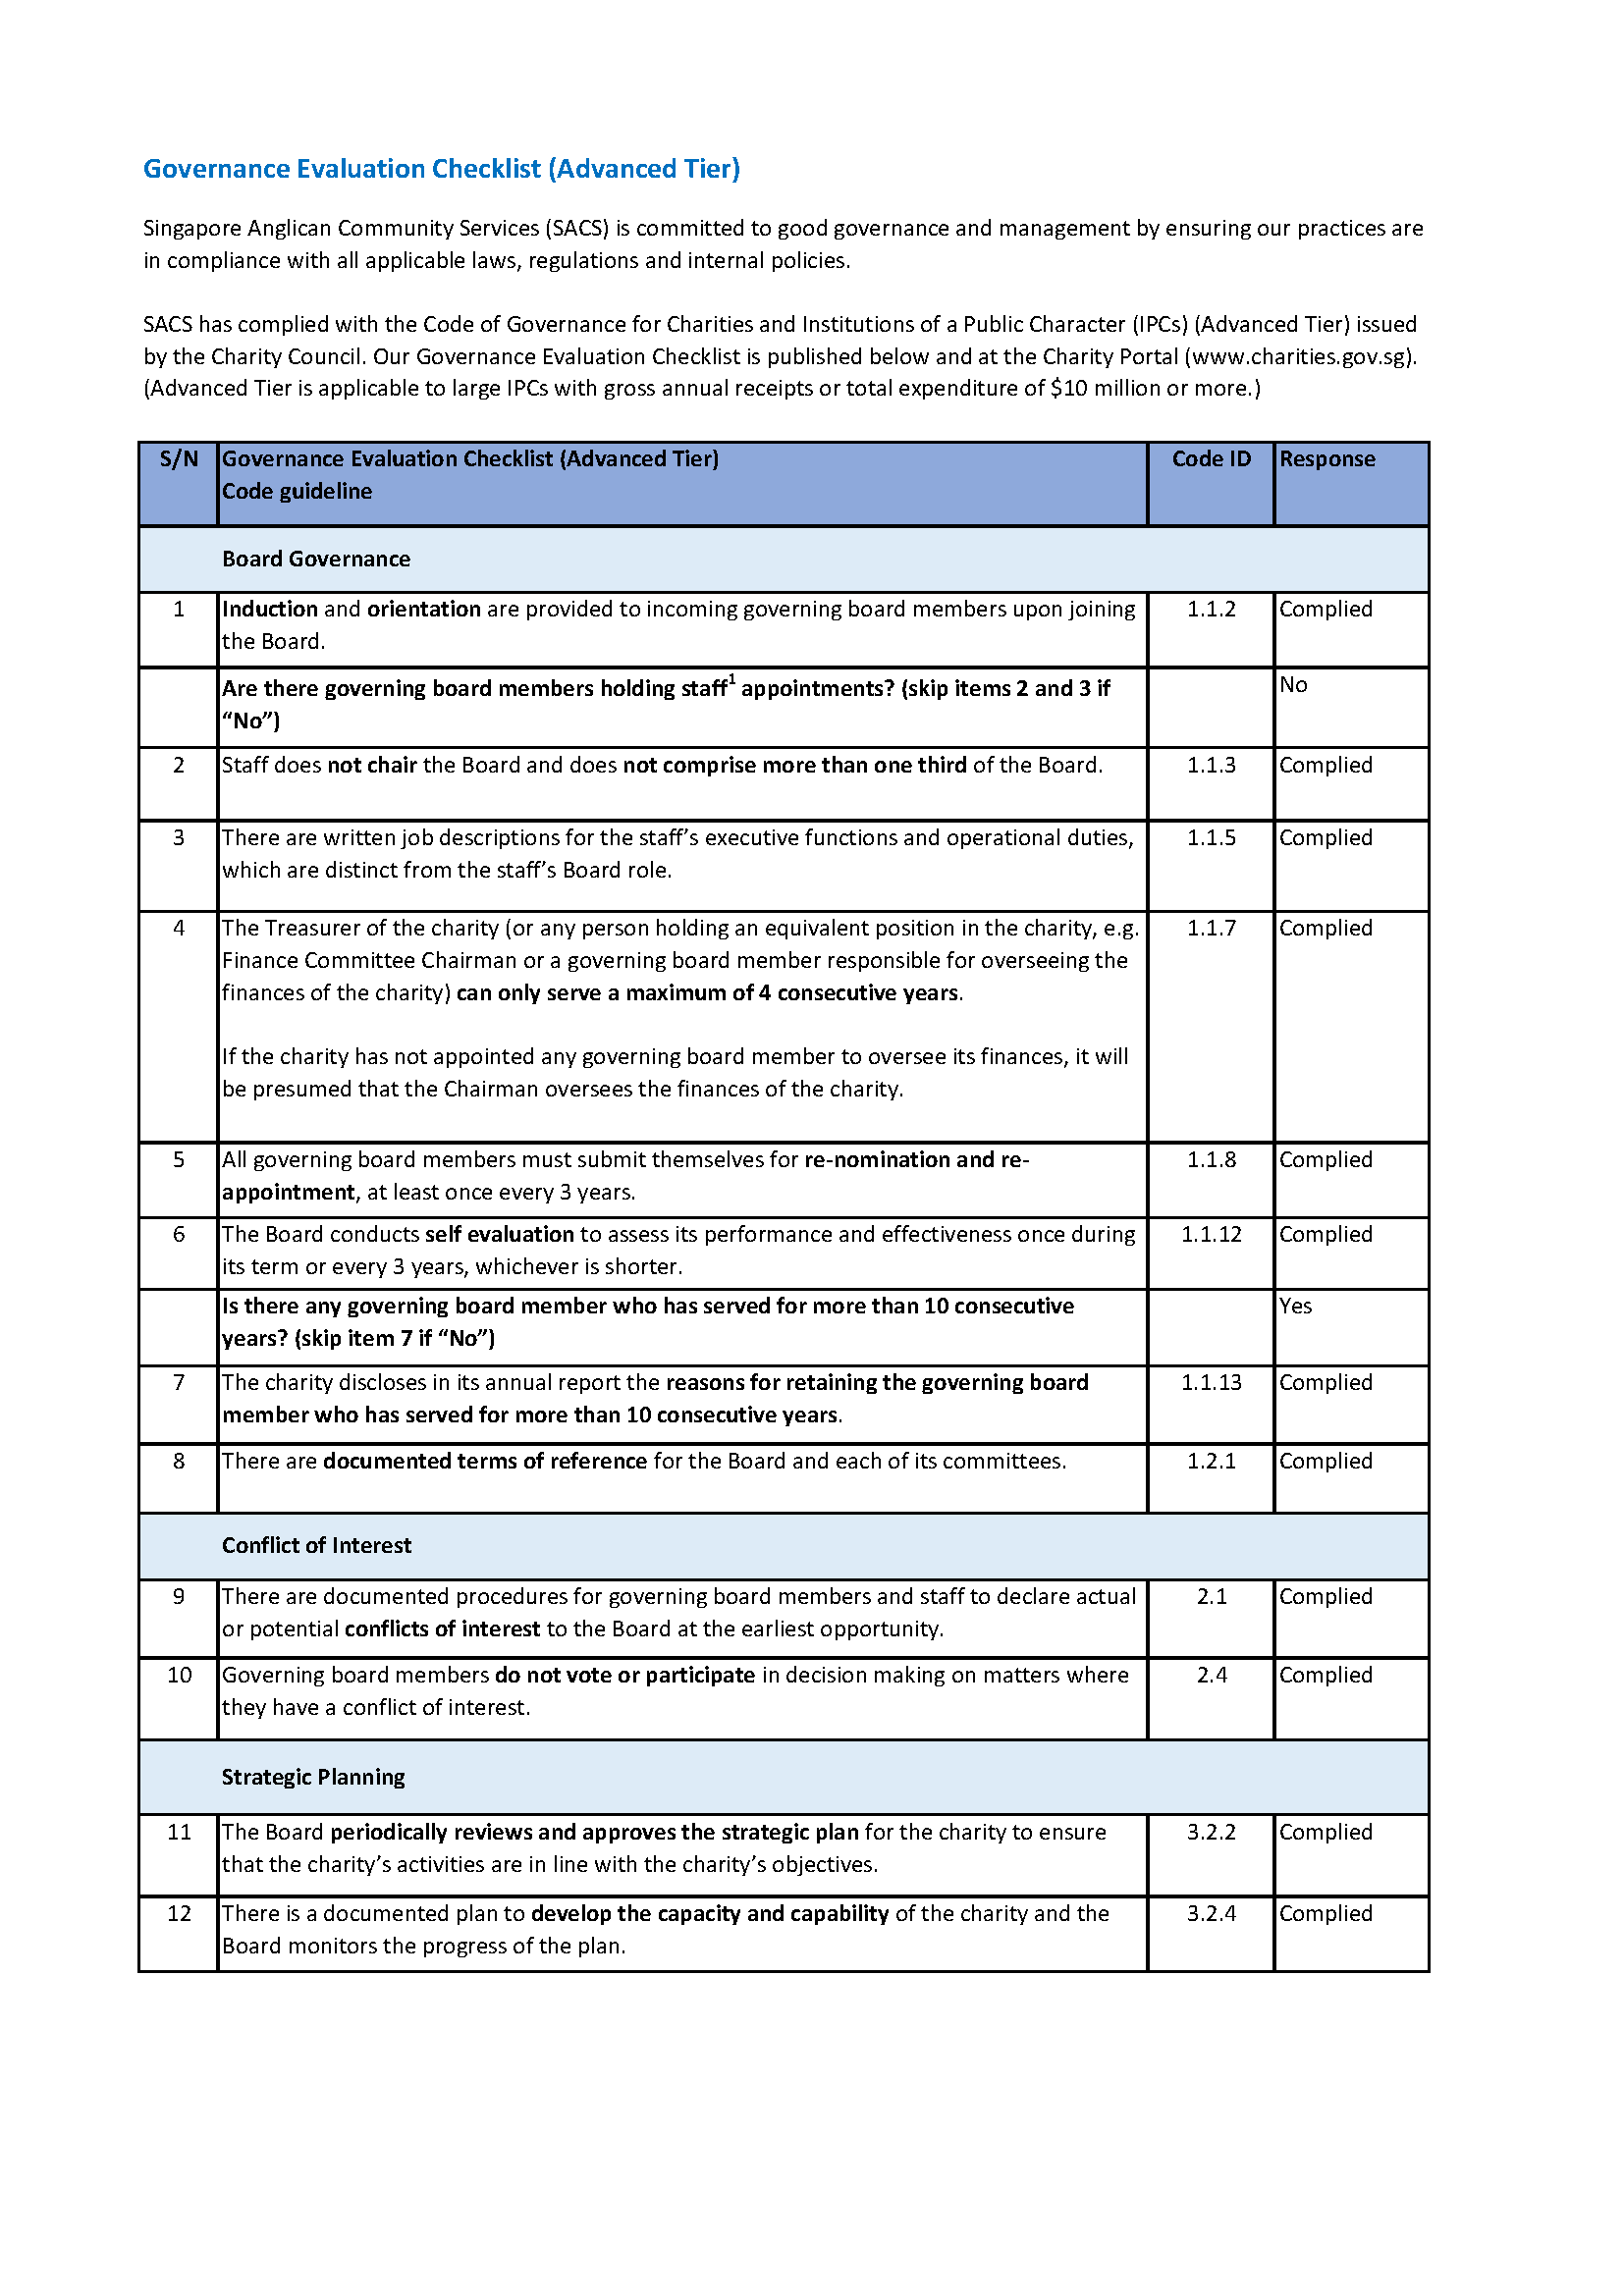 SACS_Website_-_GEC_2021_202205_6_Mar_Page_1 Governance Evaluation Checklist